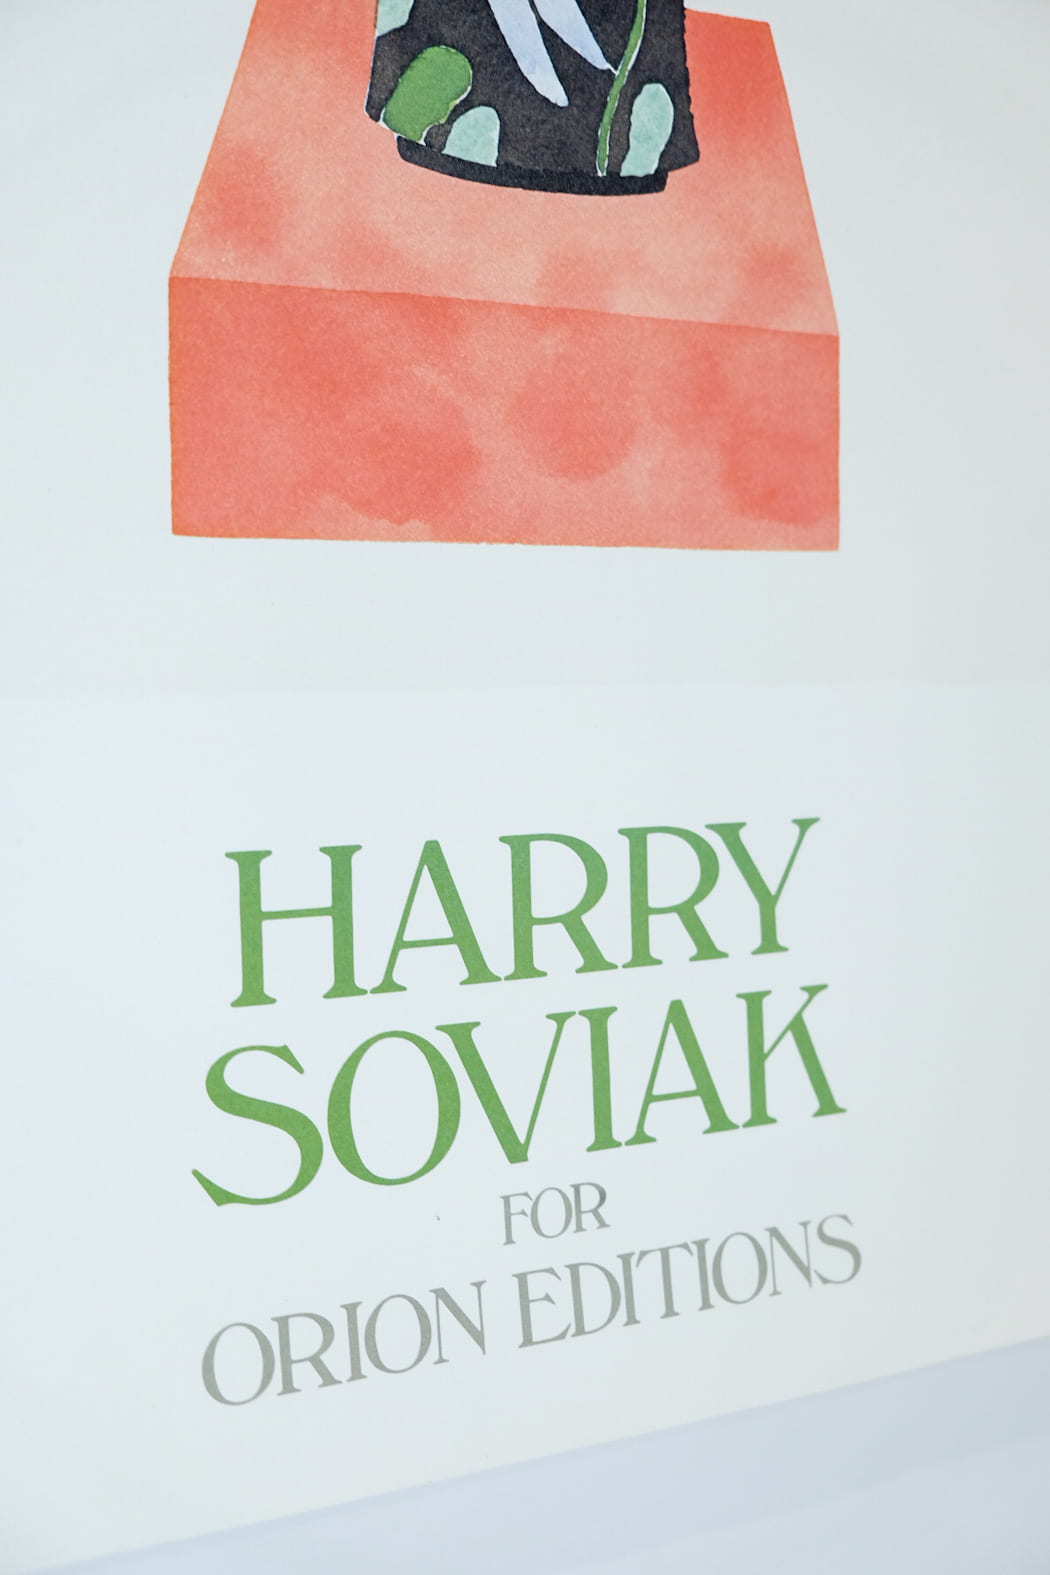 Harry Soviak "Flowers & Vase" 1979 Lithograph